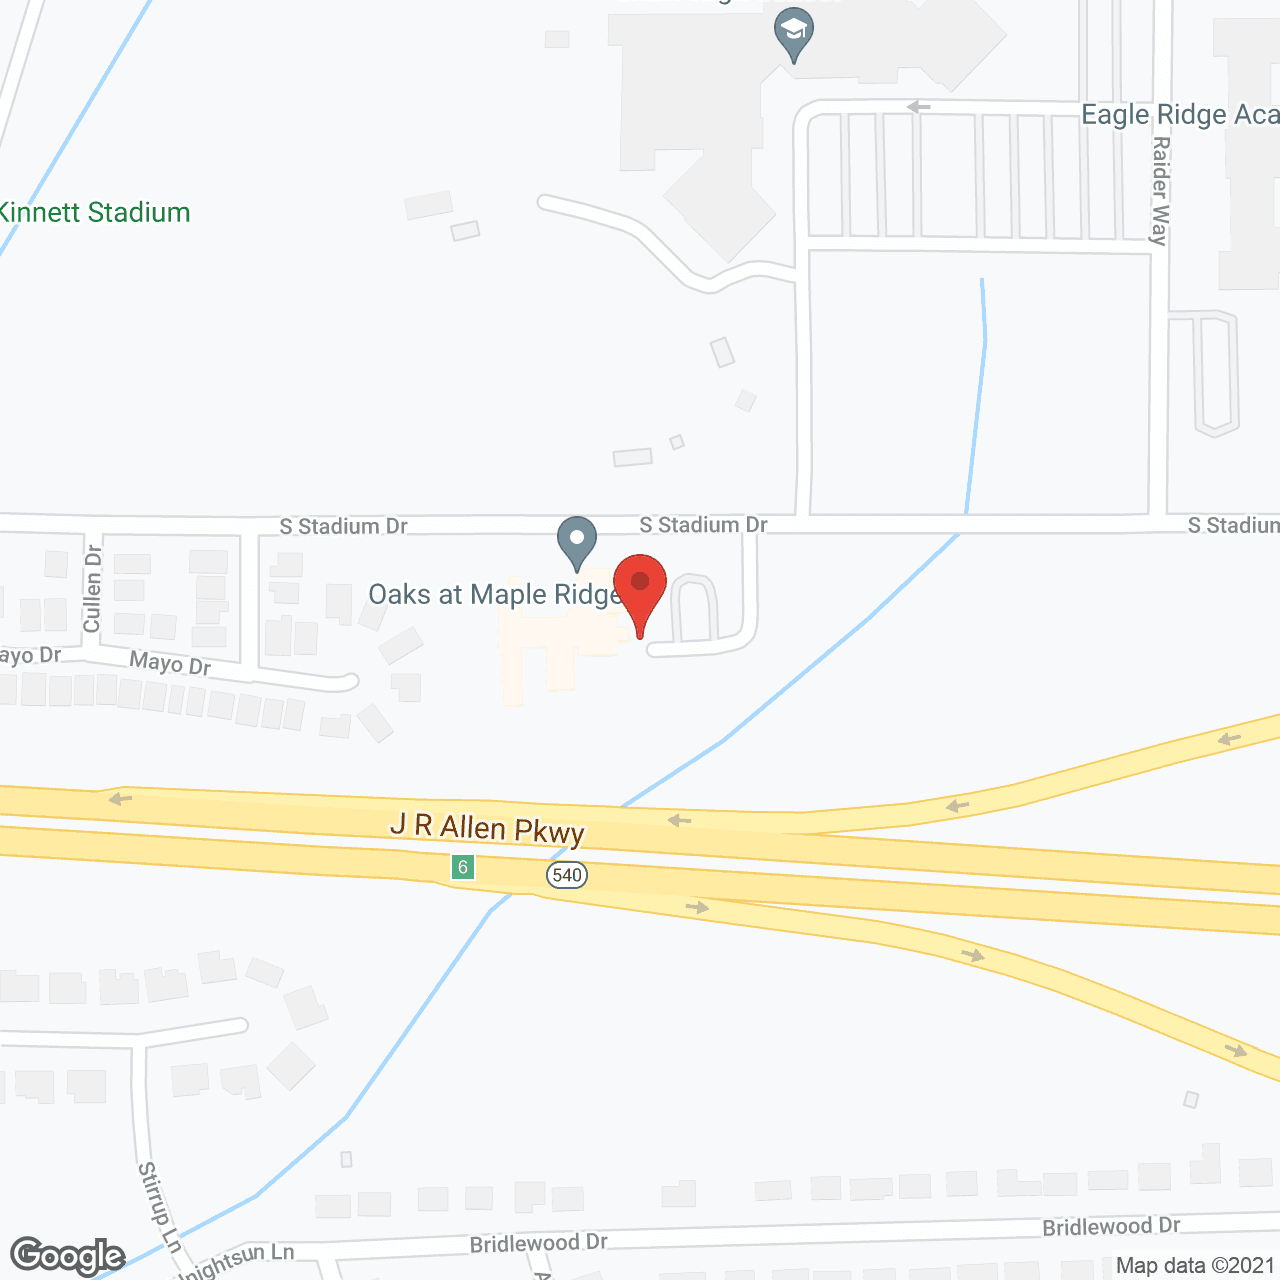 Oaks at Maple Ridge in google map